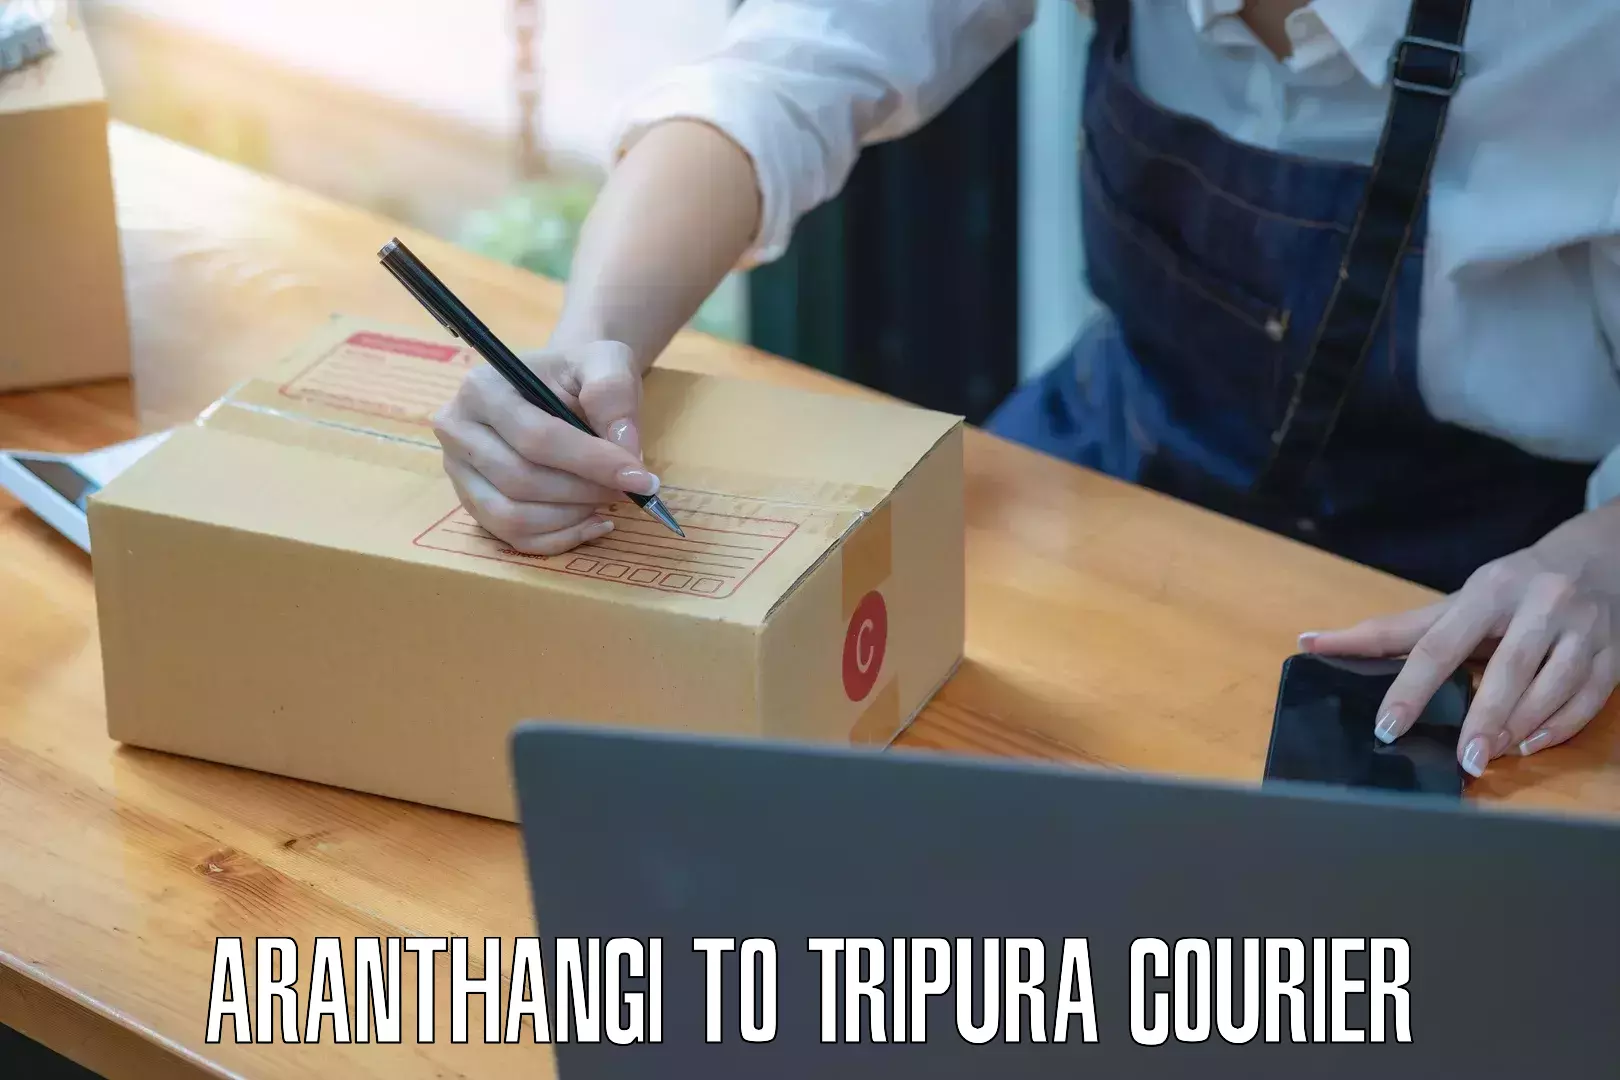 Courier service partnerships Aranthangi to Tripura